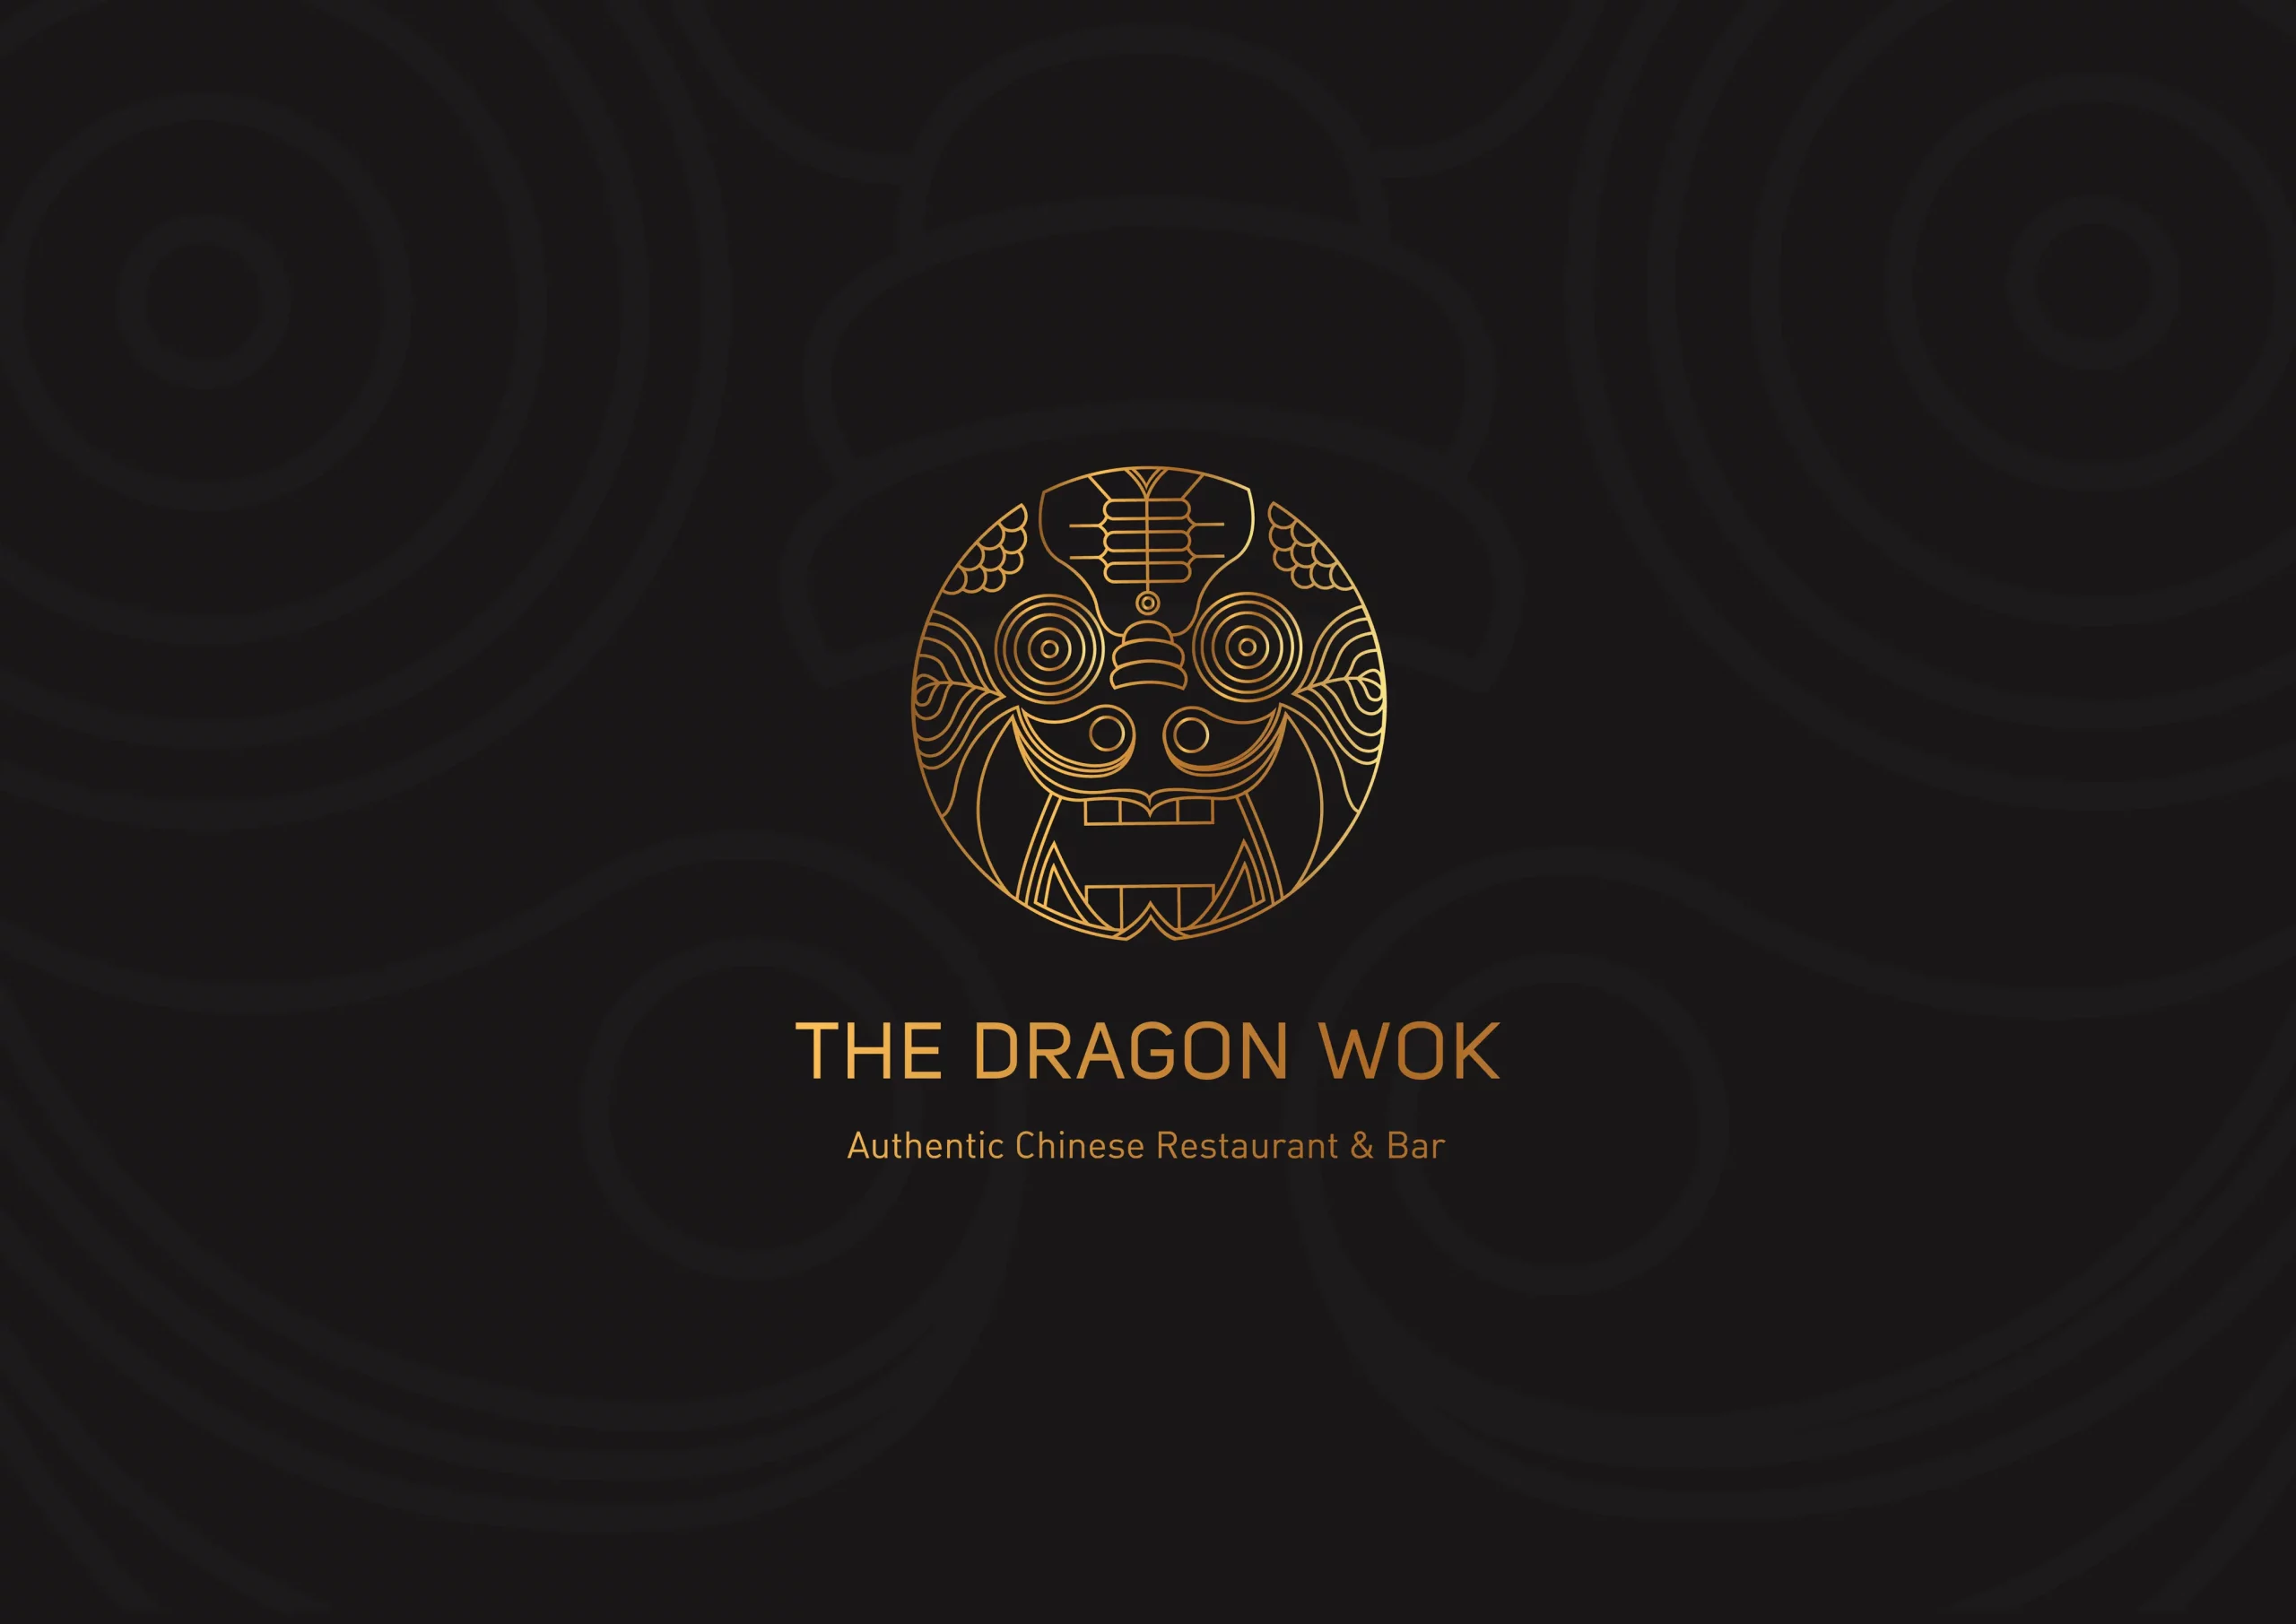 The dragon wok asian chinese restaurant logo.